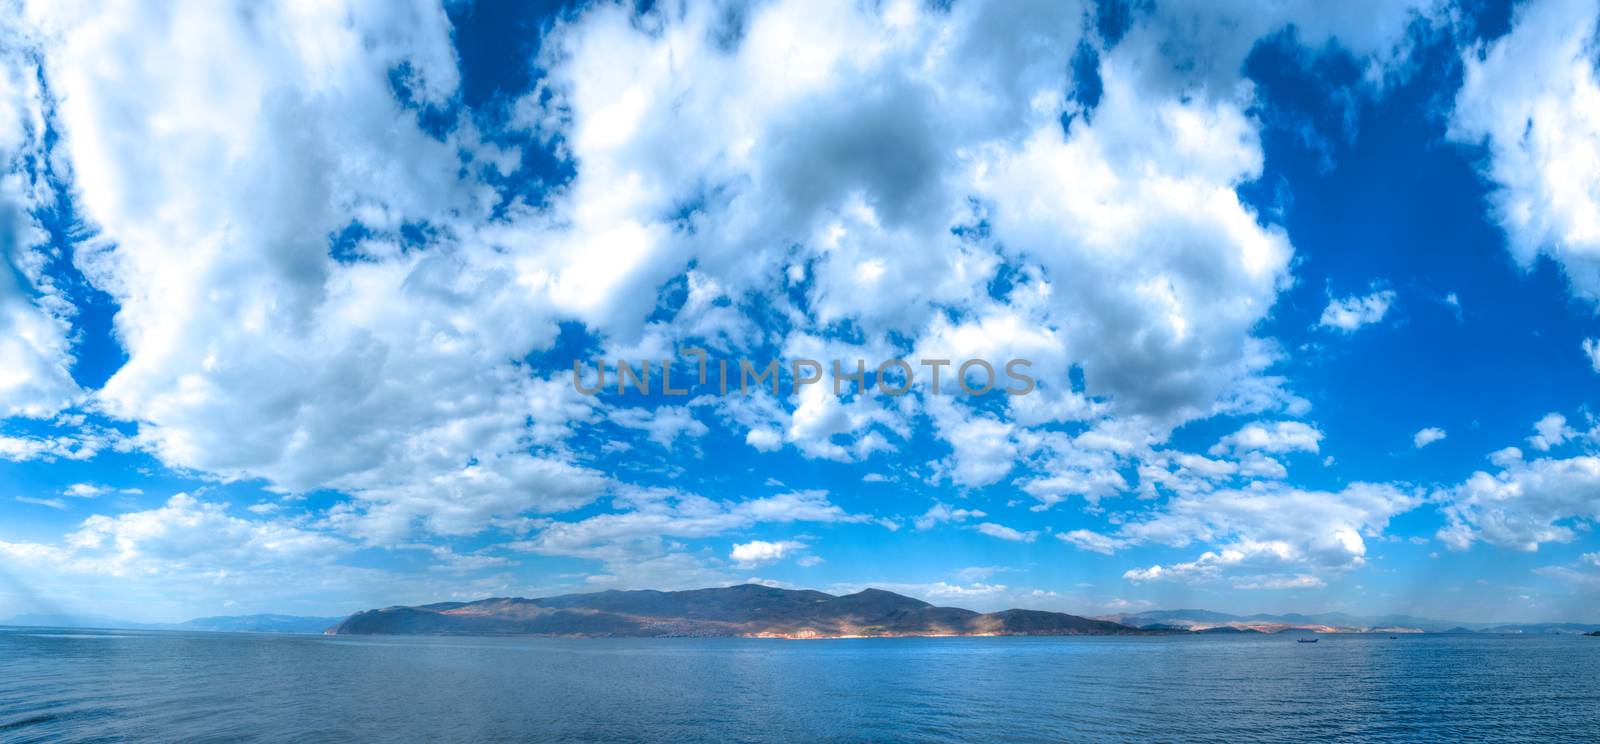 The Erhai Lake, Dali, Yunnan province, South China